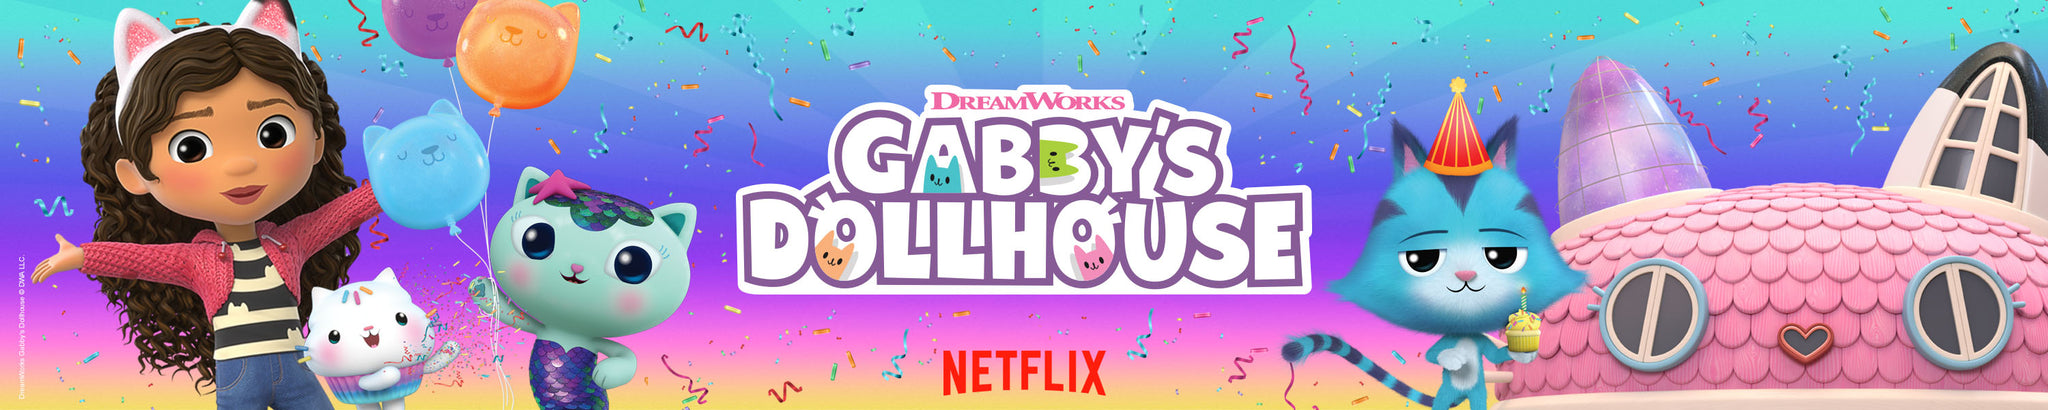 Gabby's Dollhouse - Unicorn & Punkboi